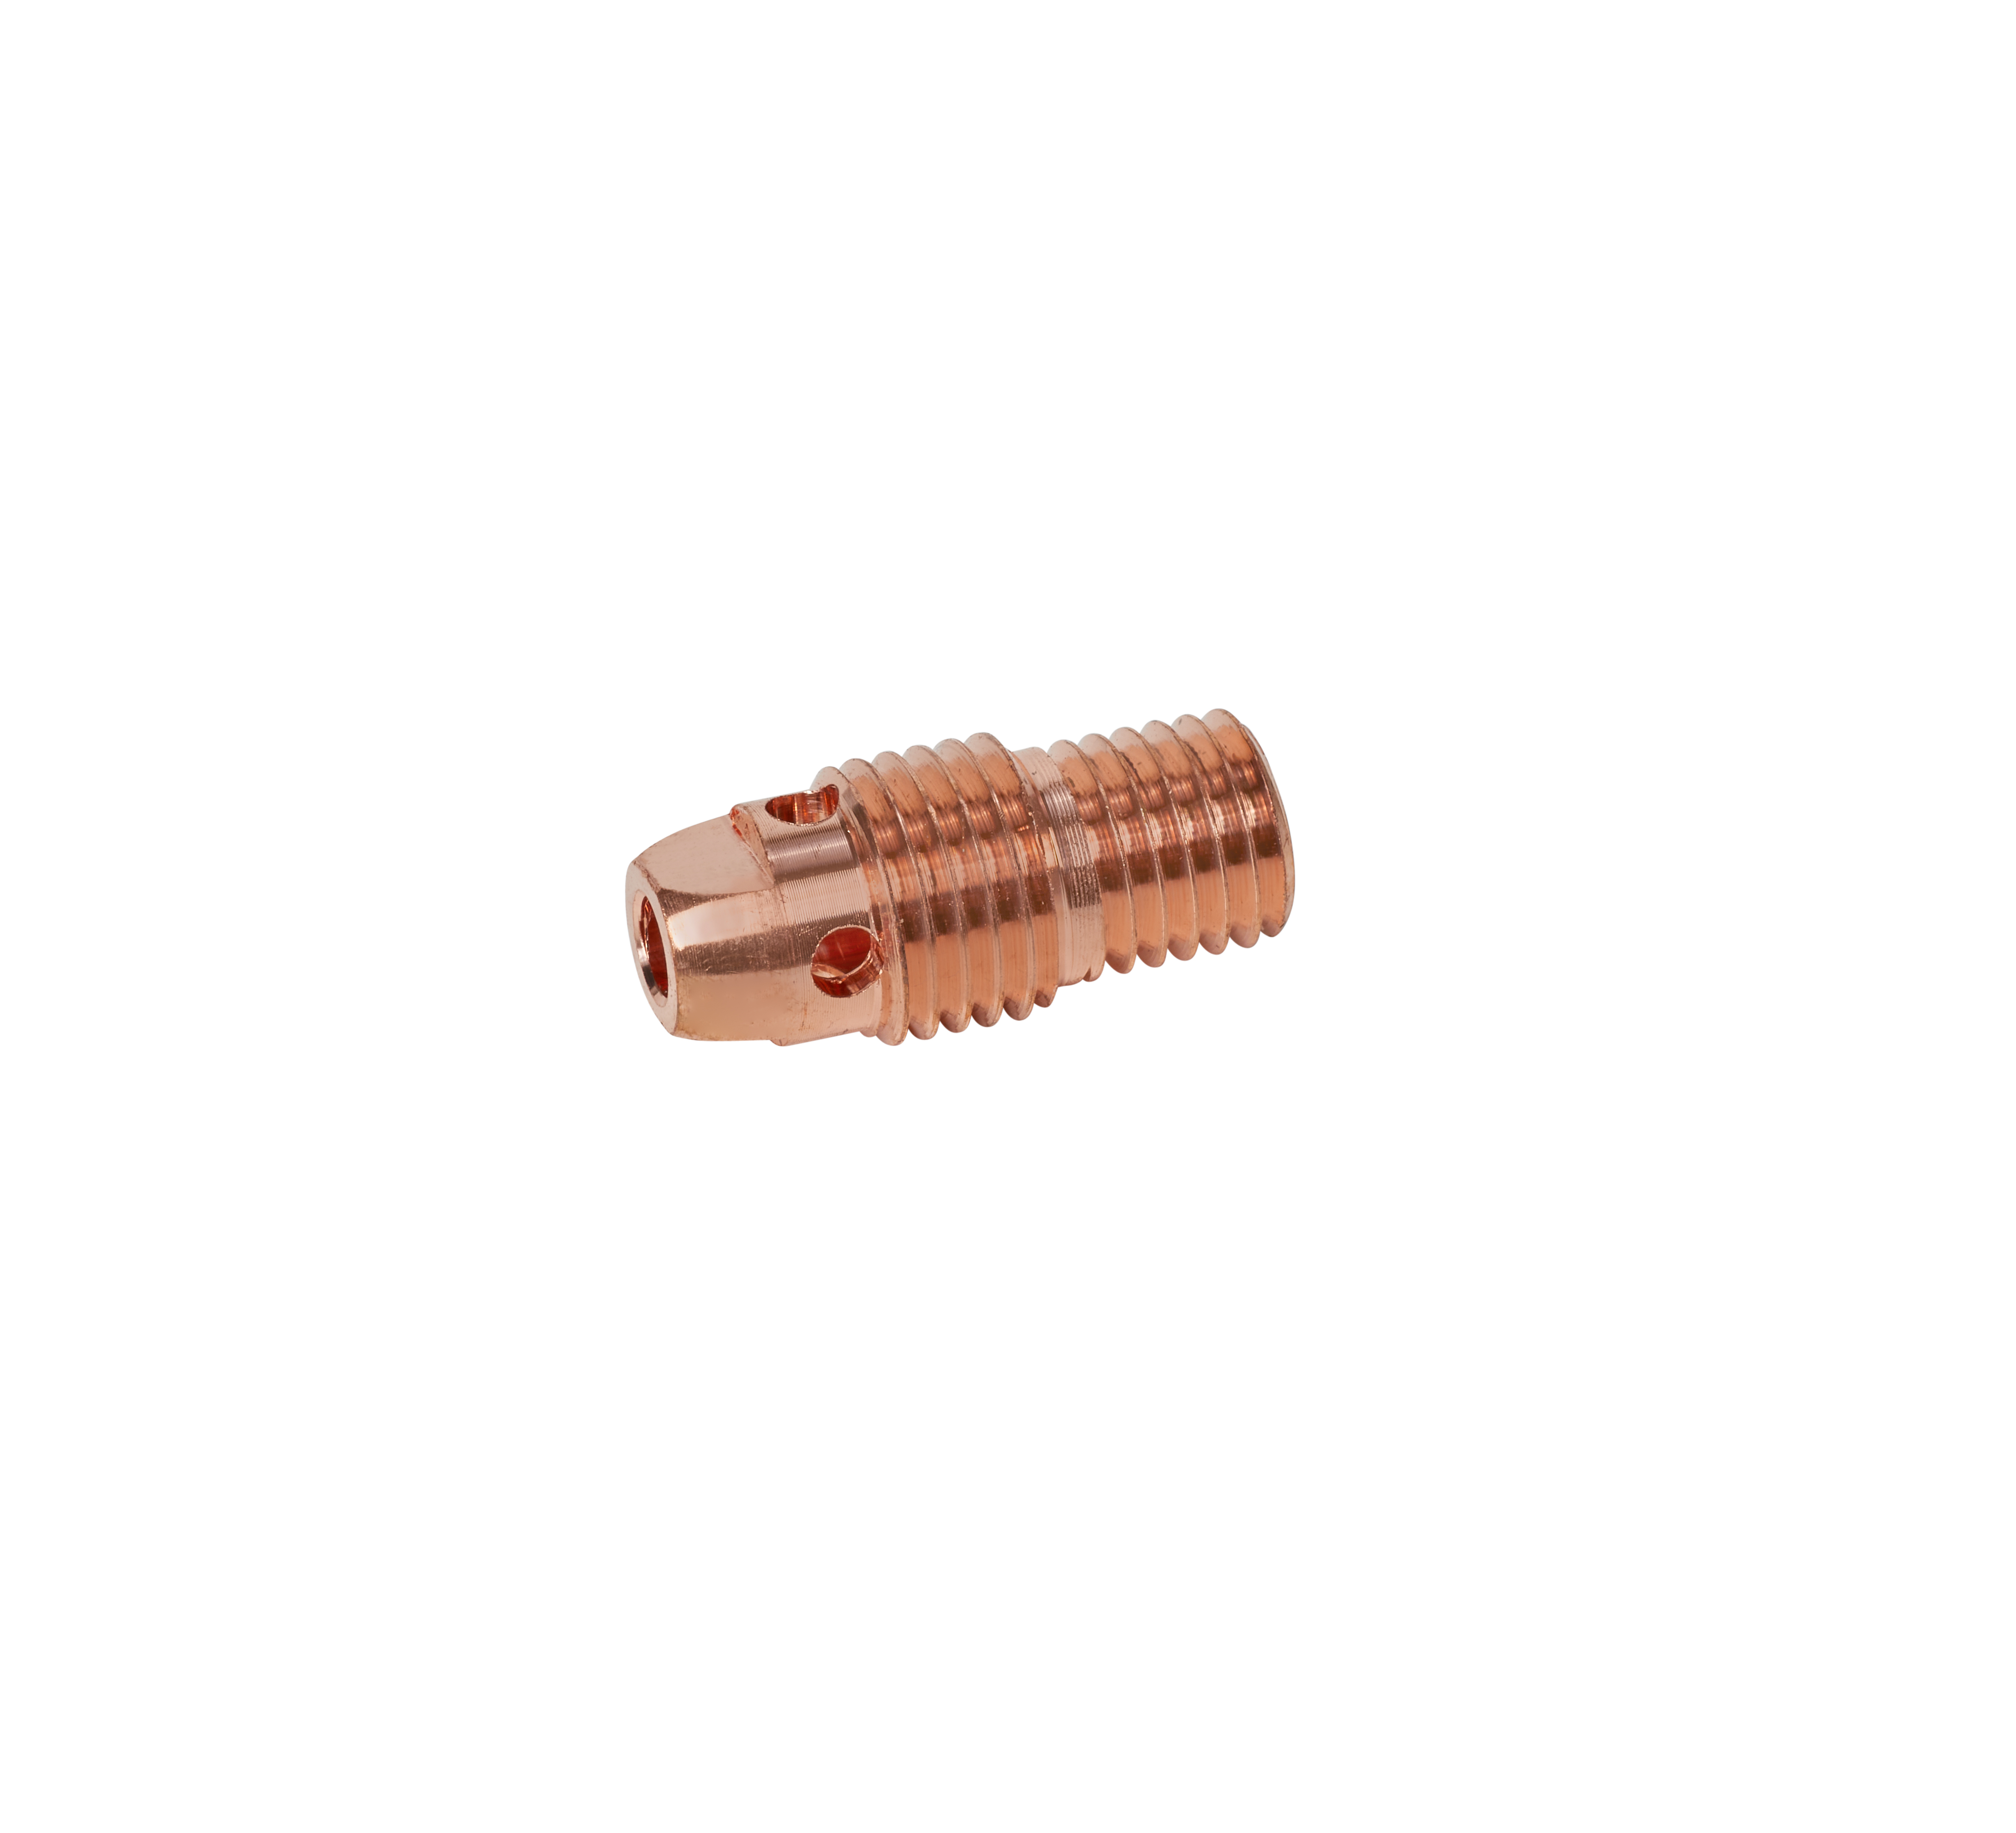 Weldmark by CK Worldwide 13N29 Copper Collet Body 1/8 (0.125) Max Electrode Diameter